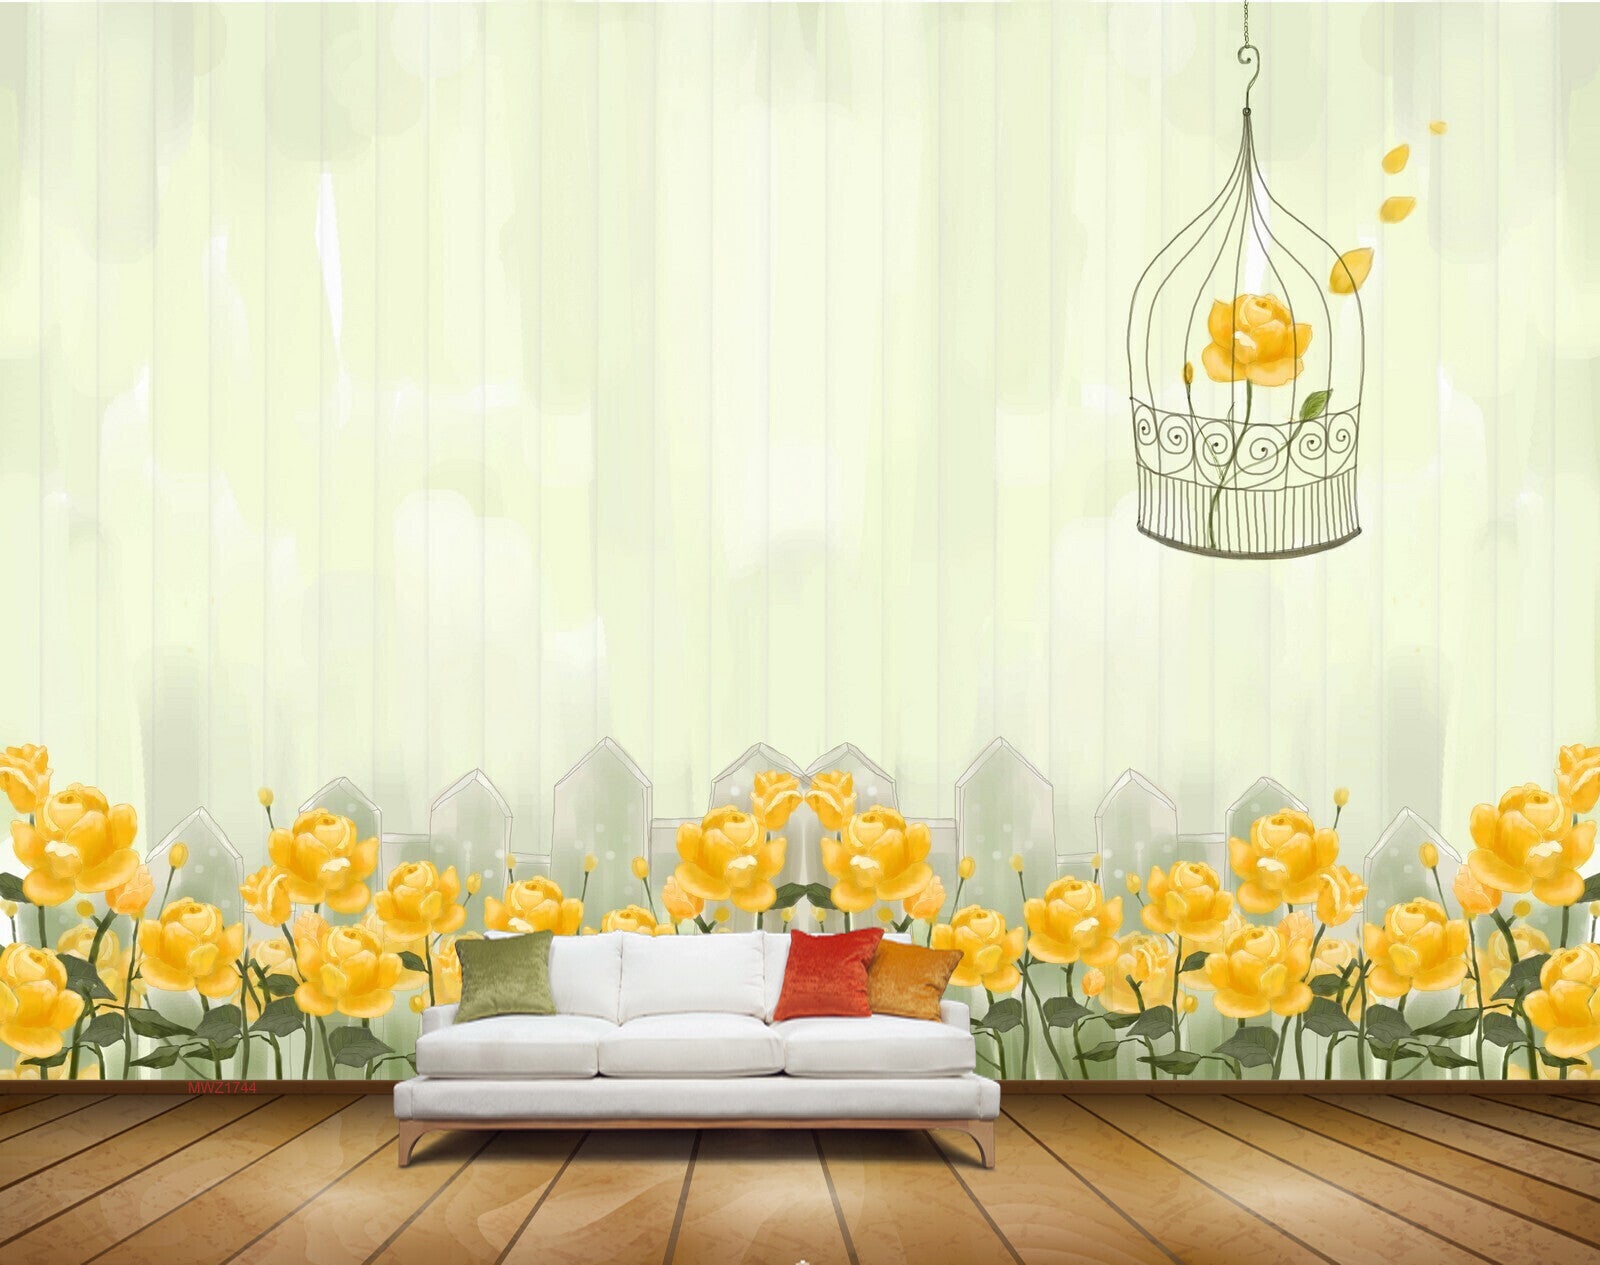 Avikalp MWZ1744 Orange Yellow Flowers Cage Bird 3D HD Wallpaper